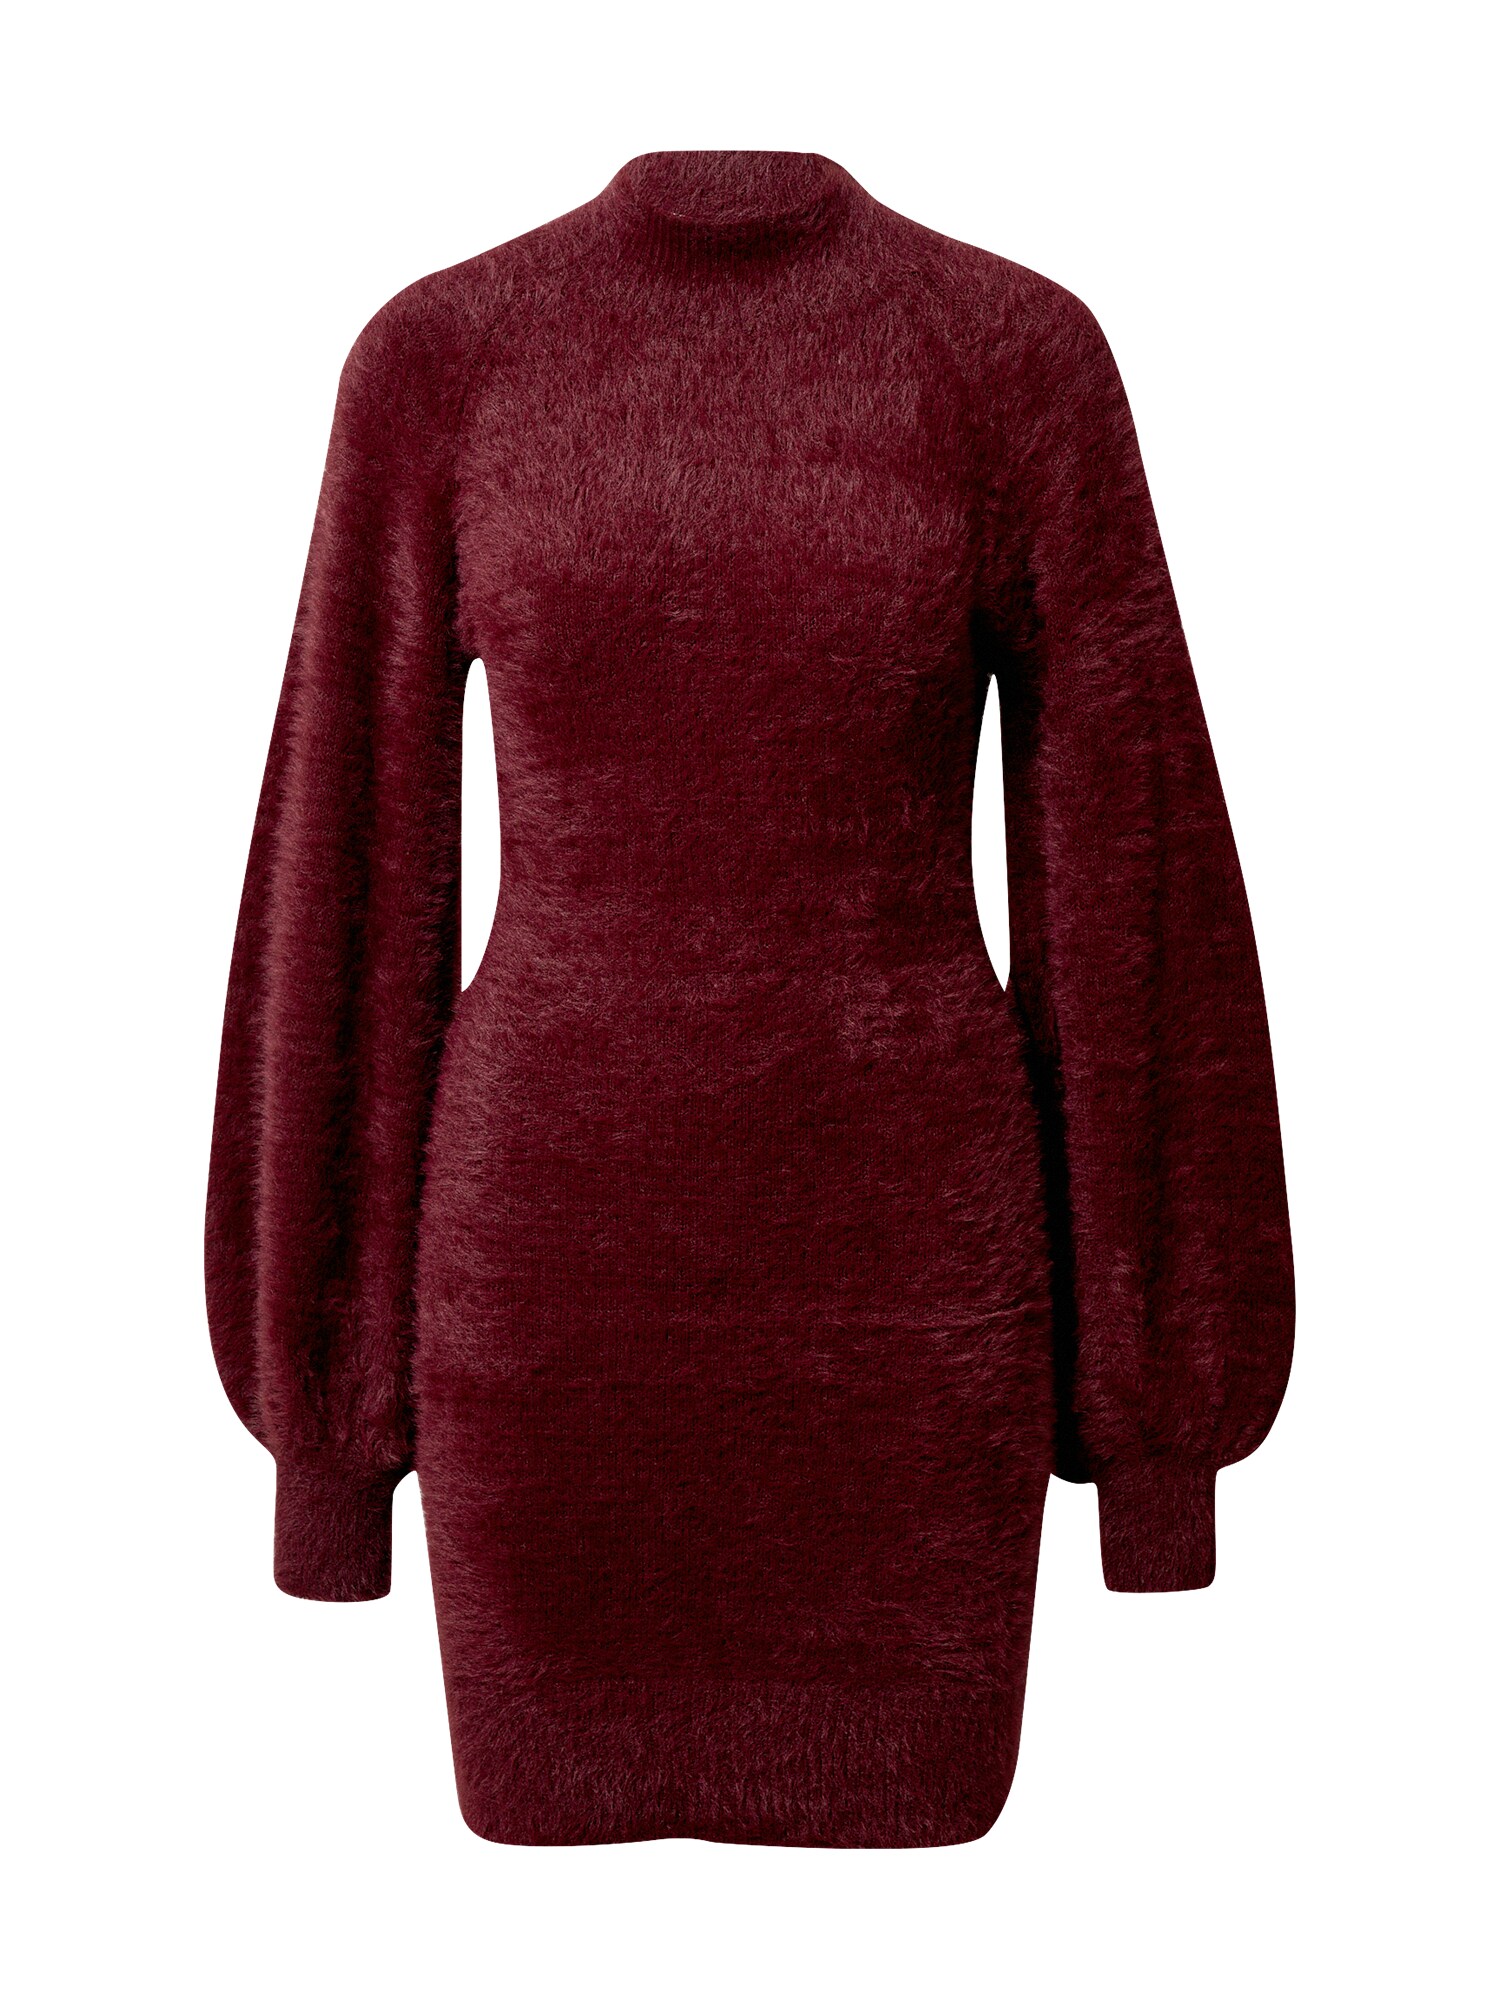 Bardot Megzta suknelė 'Bell'  vyno raudona spalva